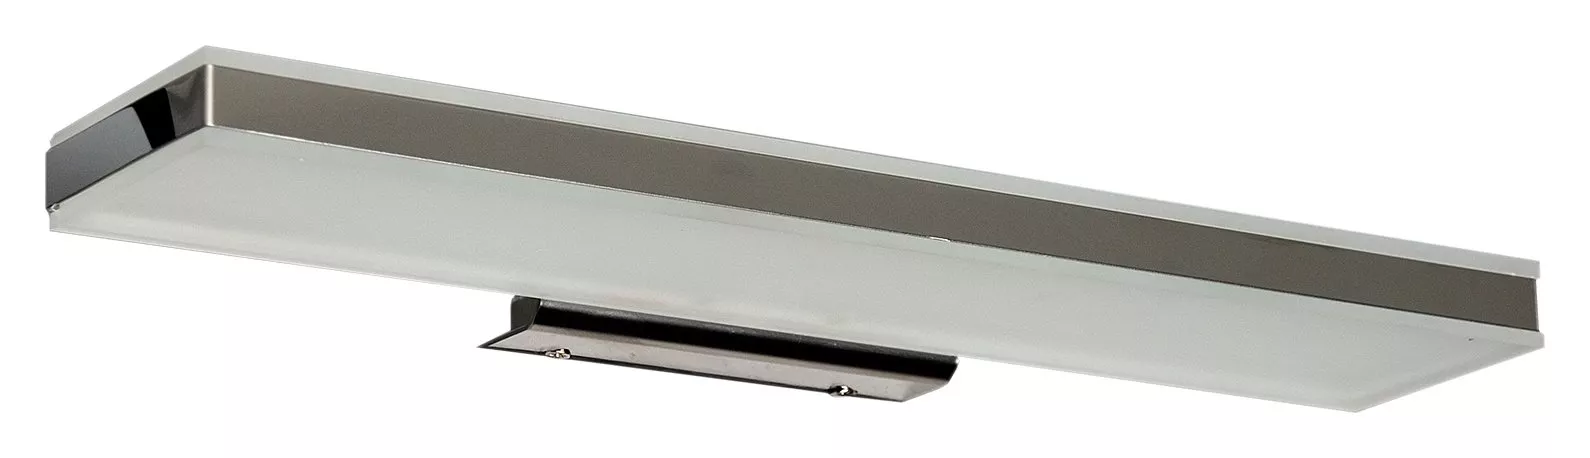 Светильник Aquanet WT-400 Led, размер 40, цвет белый